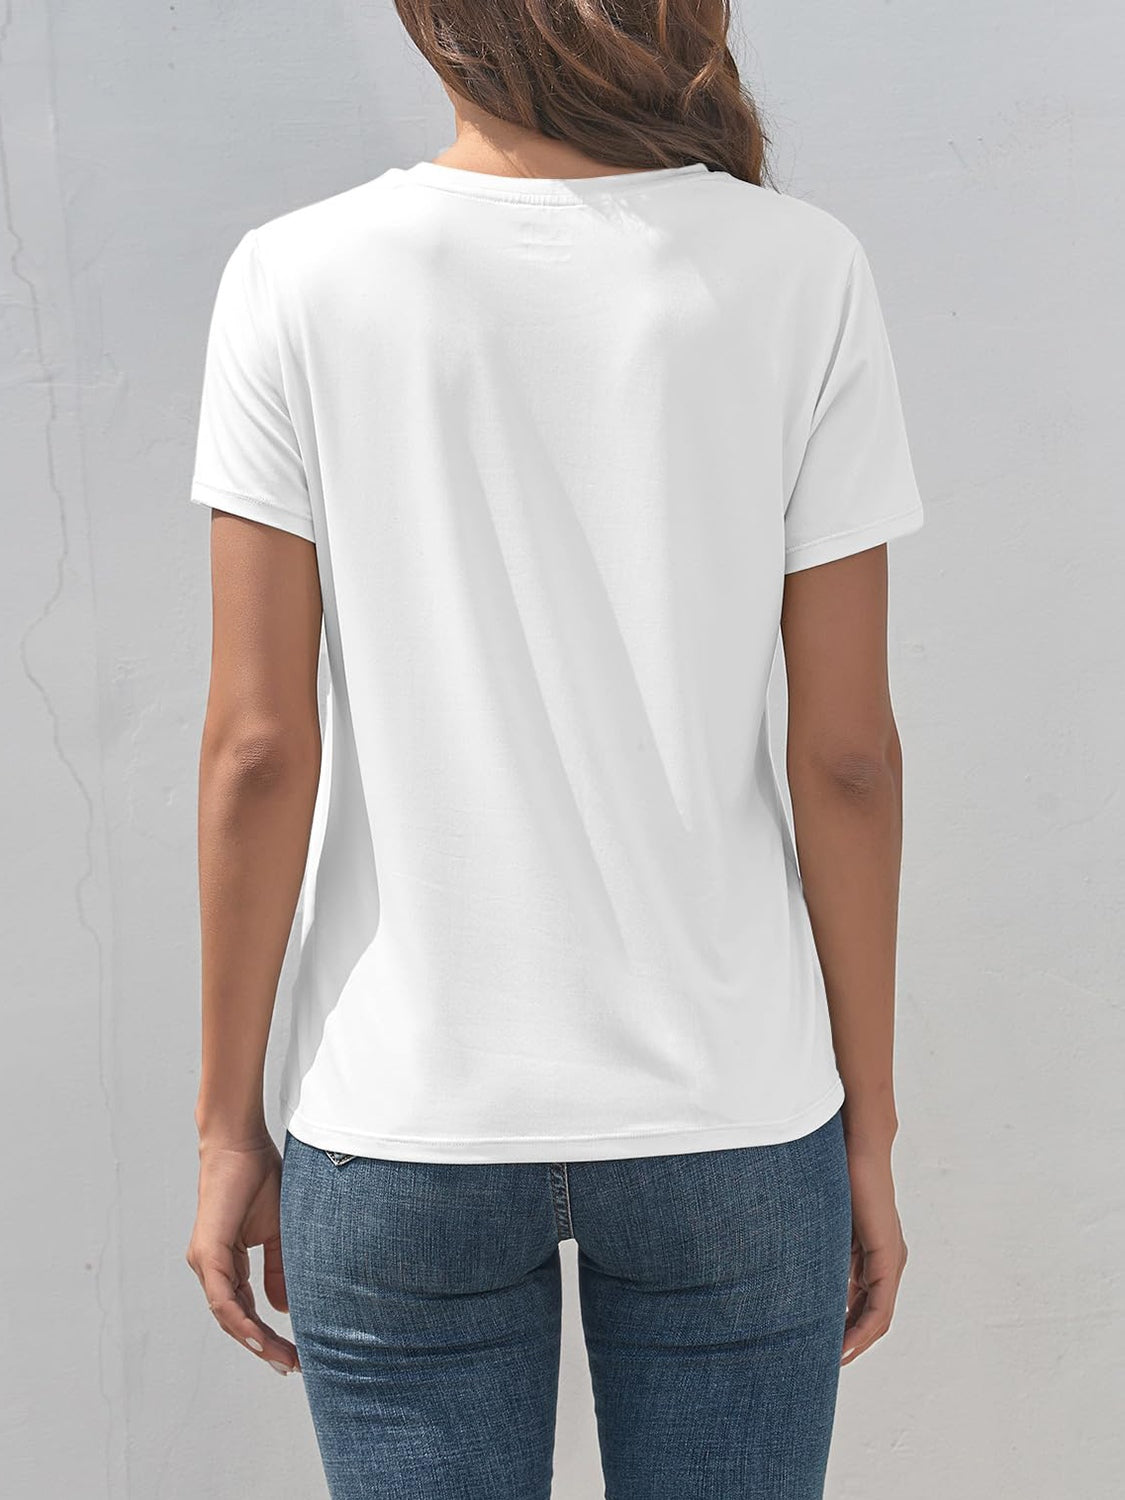 Rabbit Graphic Round Neck Short Sleeve T-Shirt White S 